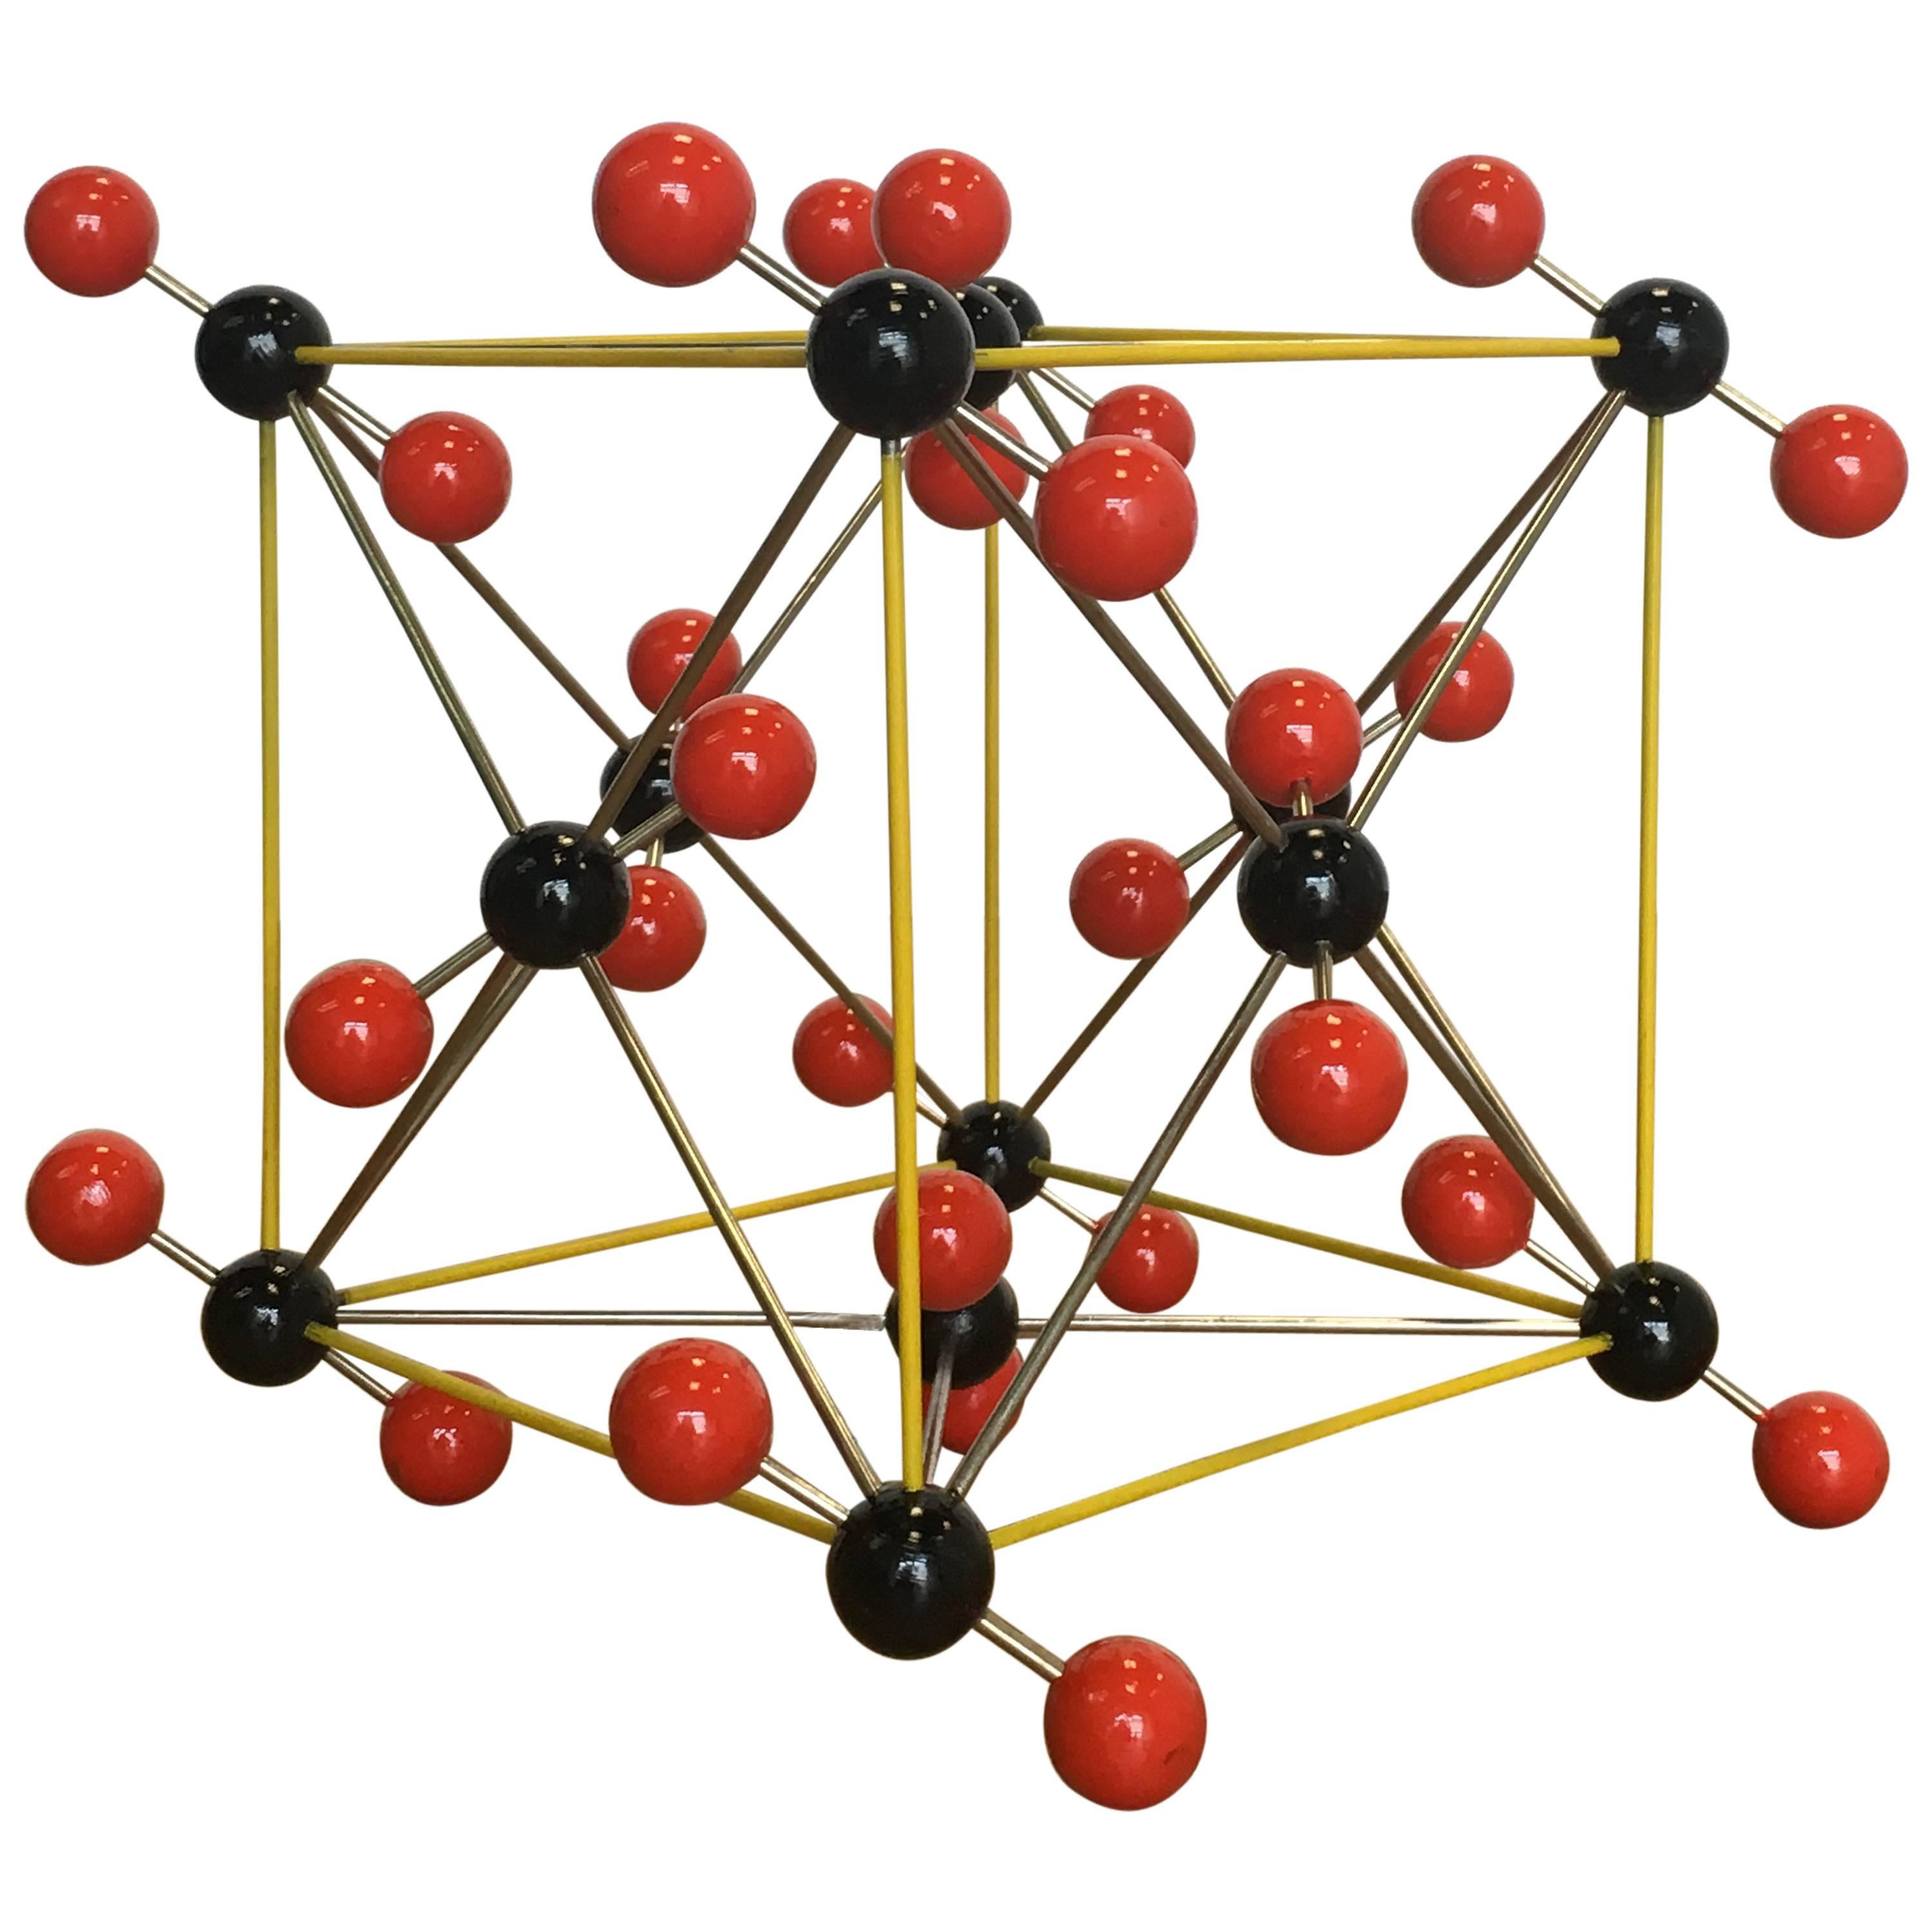 Vintage Ball and Stick Molecular Model of Carbon Dioxide